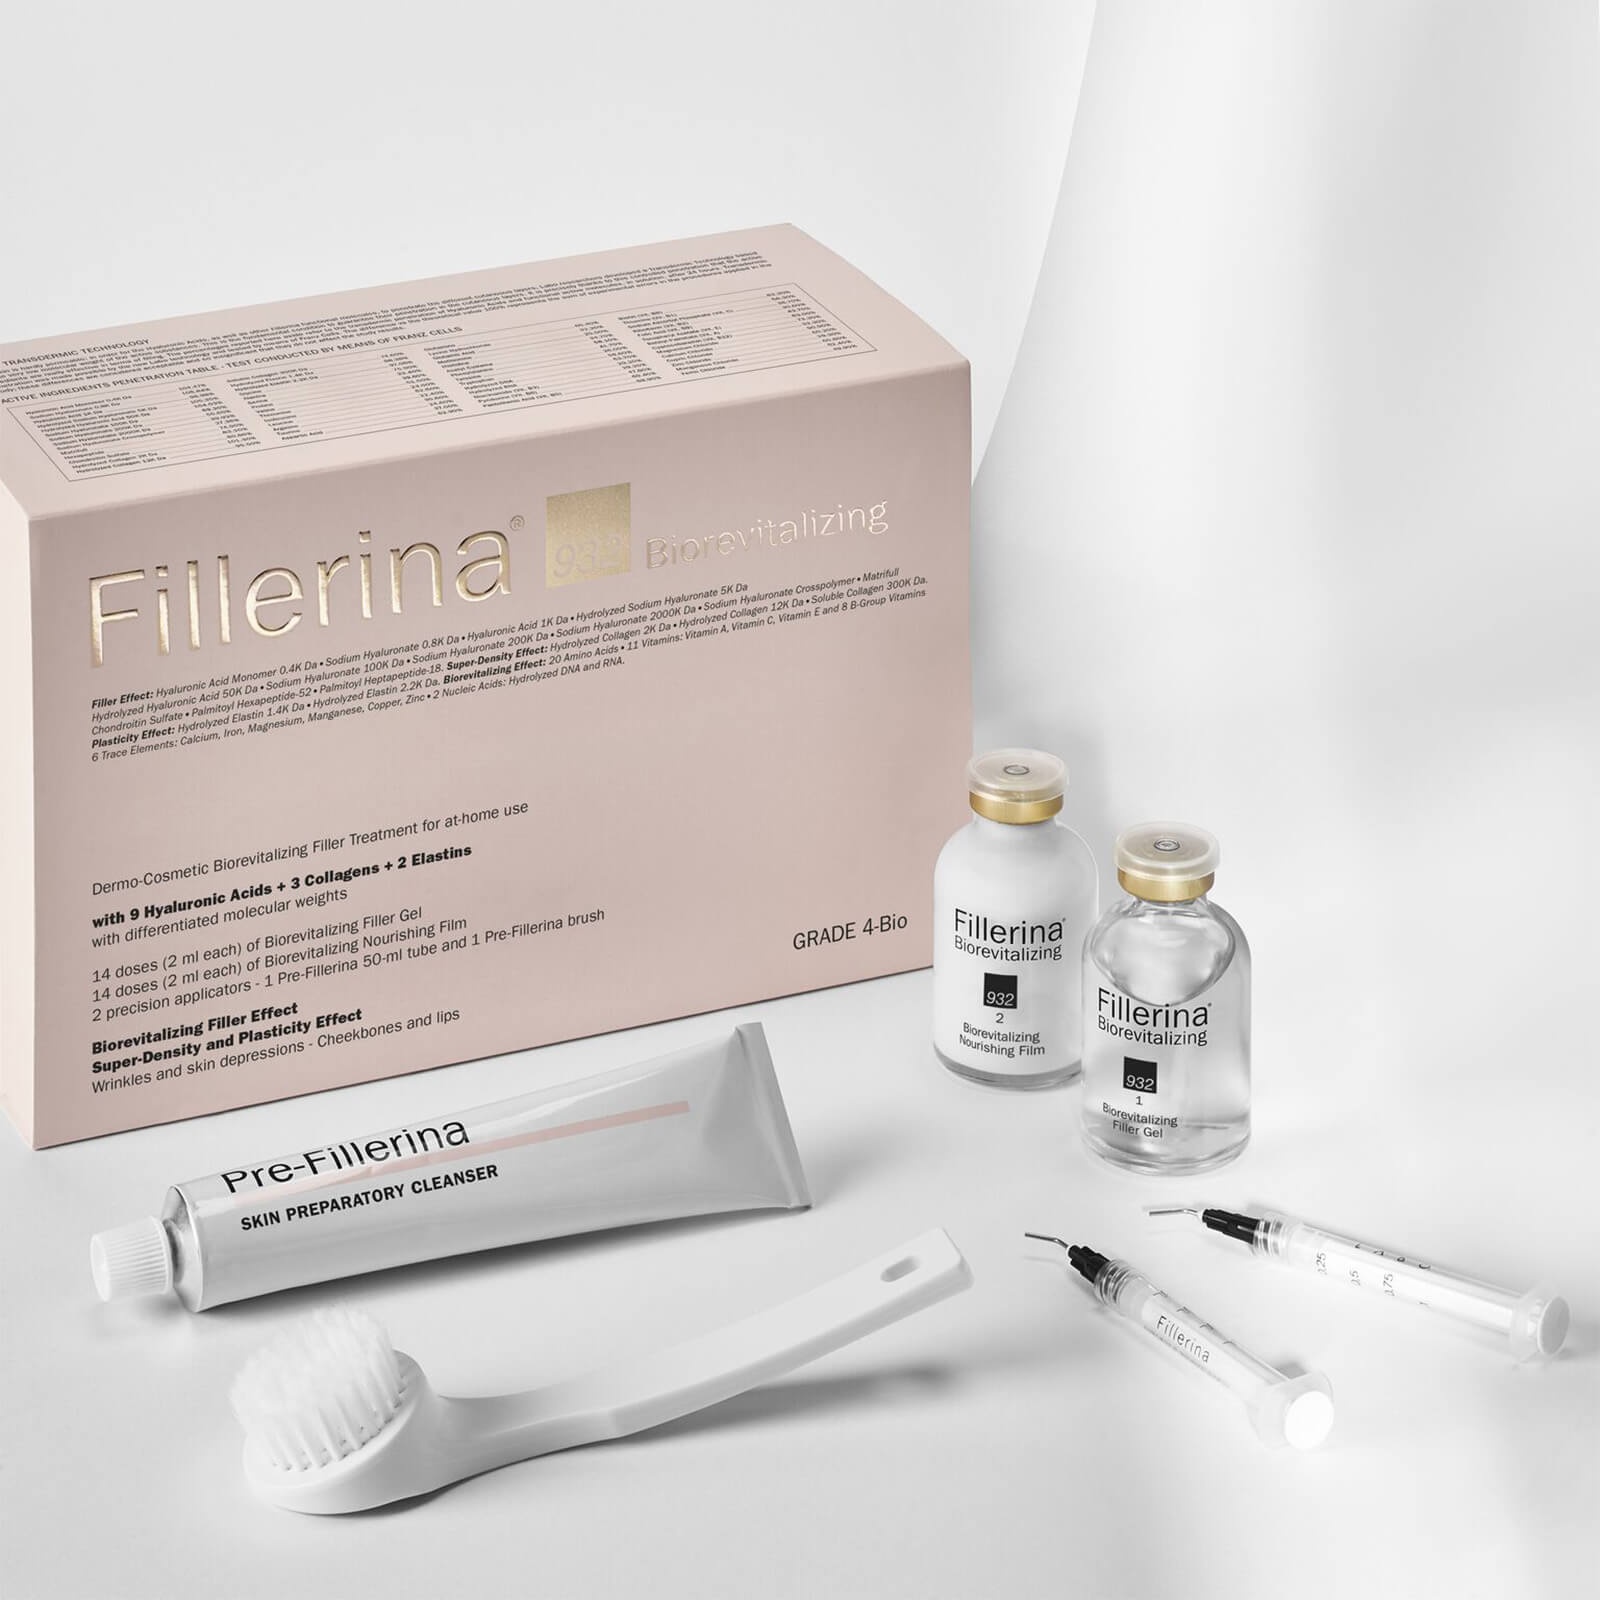 Fillerina 932 Biorevitalizing Filler Treatment Grade 4